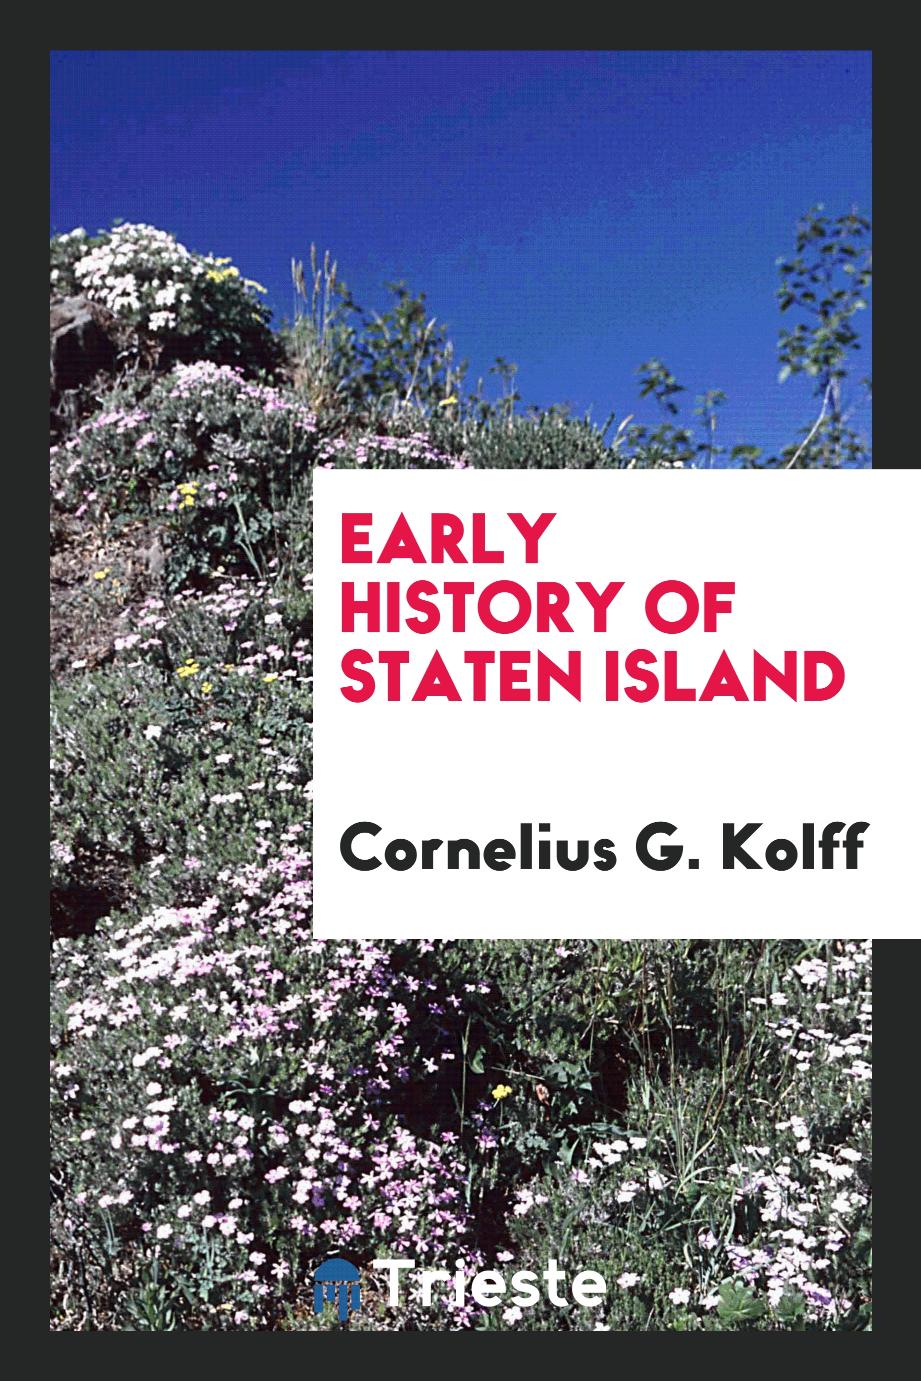 Cornelius G. Kolff - Early History of Staten Island